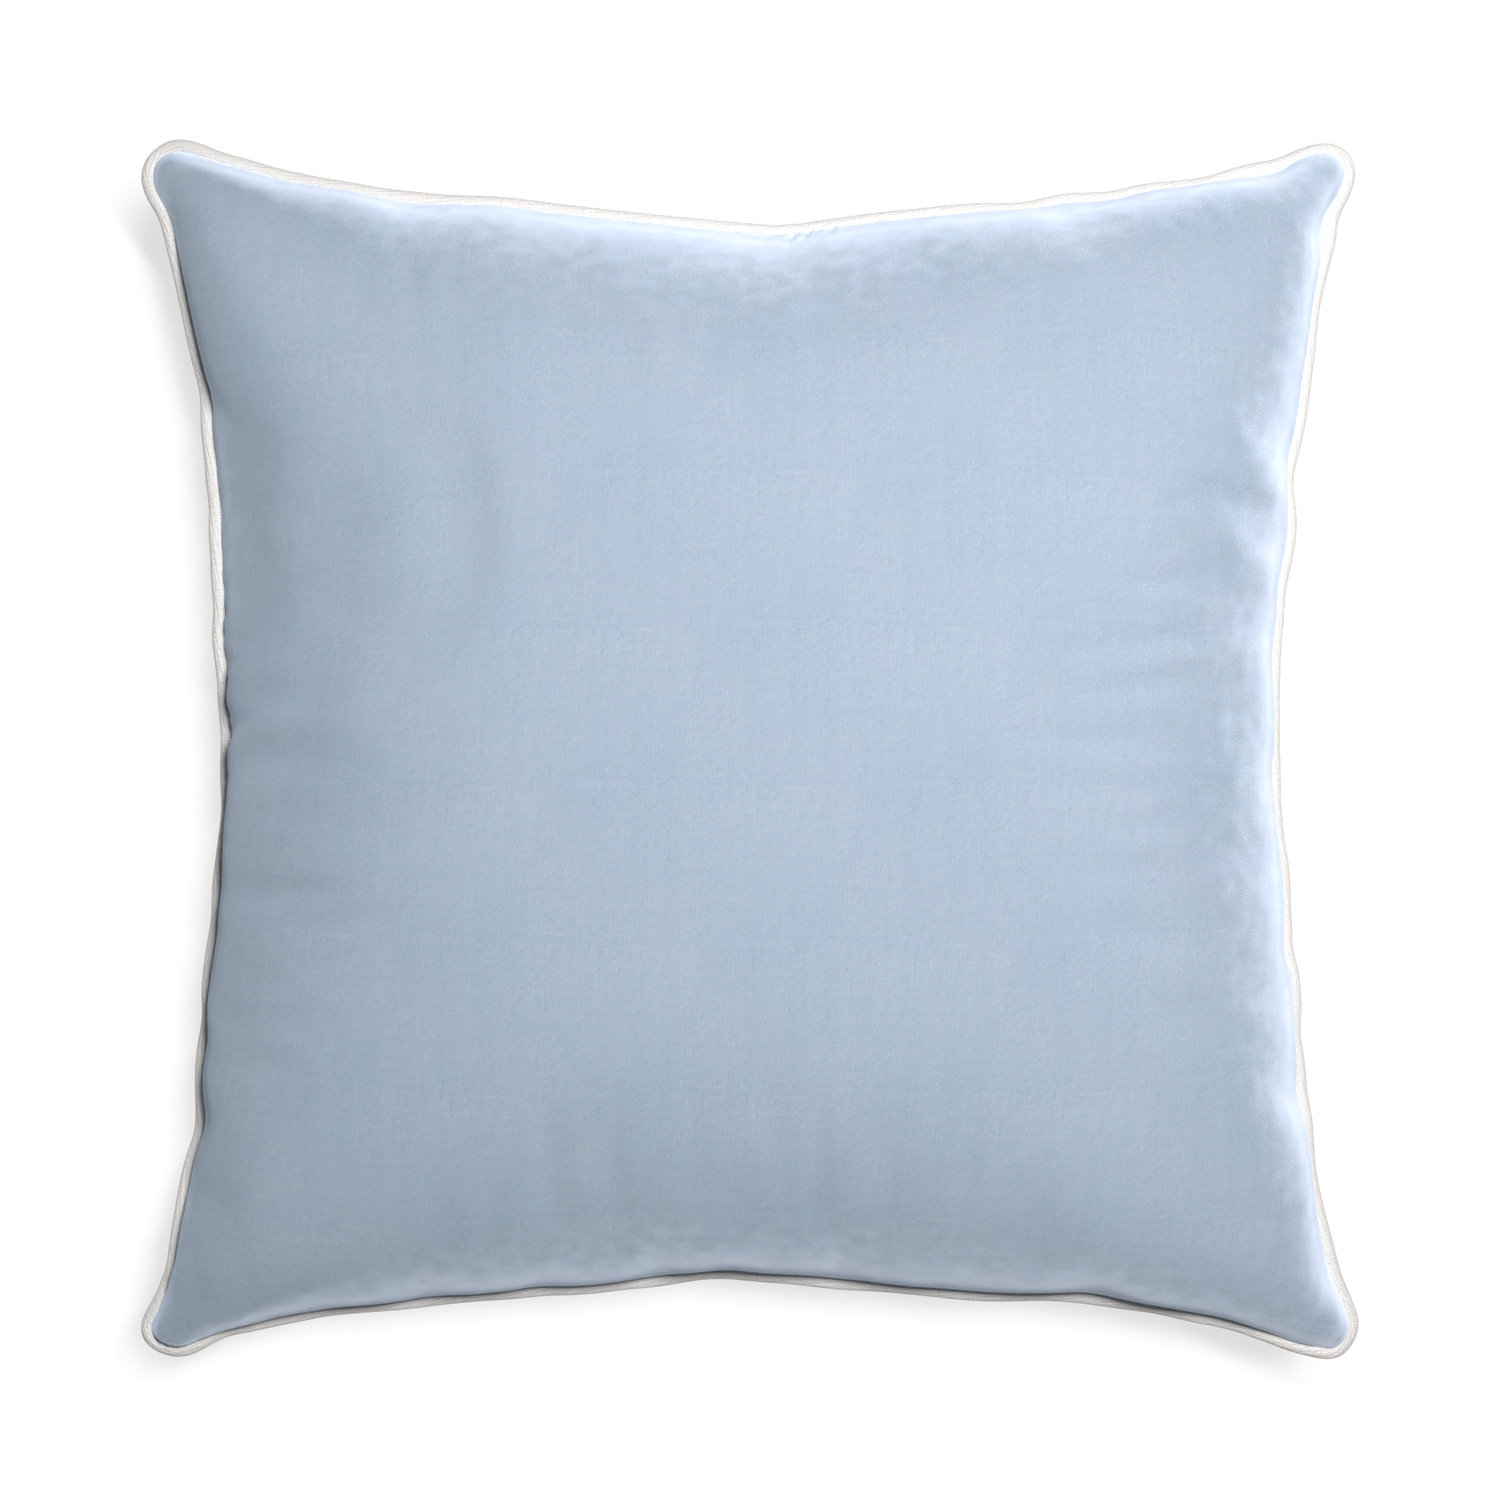 square light blue velvet pillow with white piping 